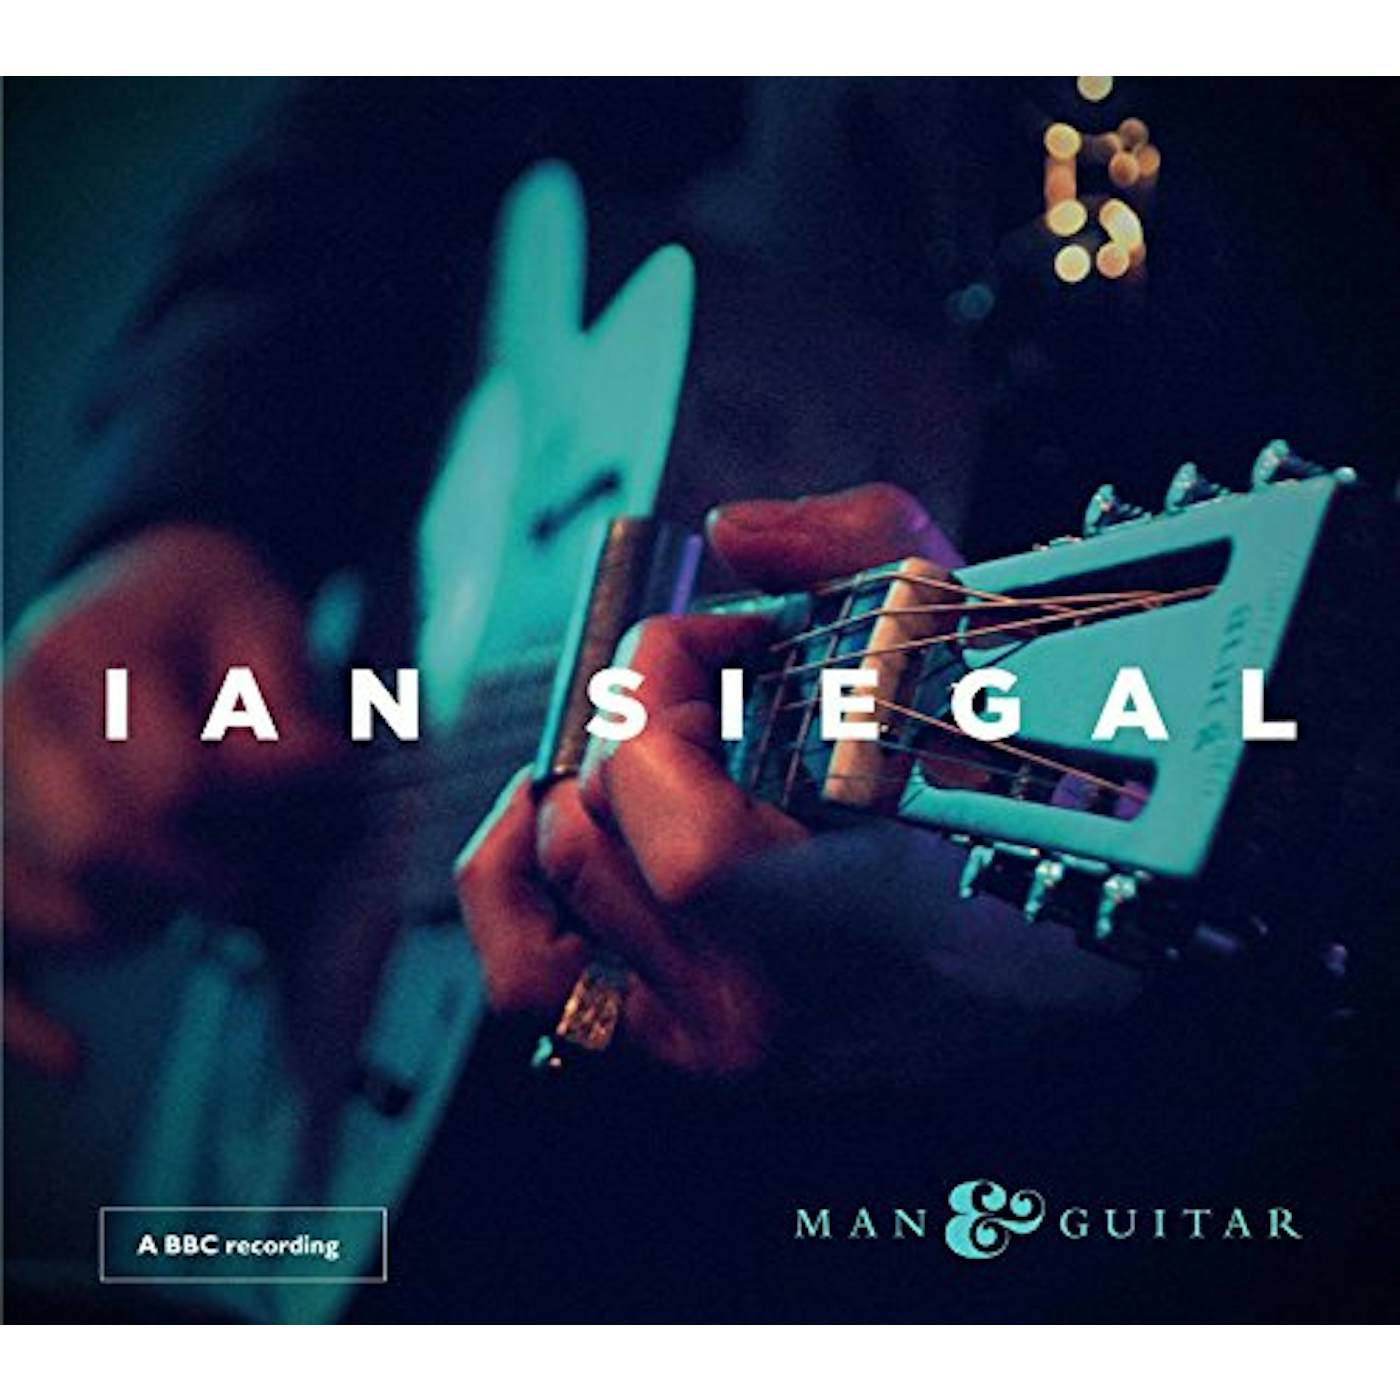 Ian Siegal MAN & GUITAR CD